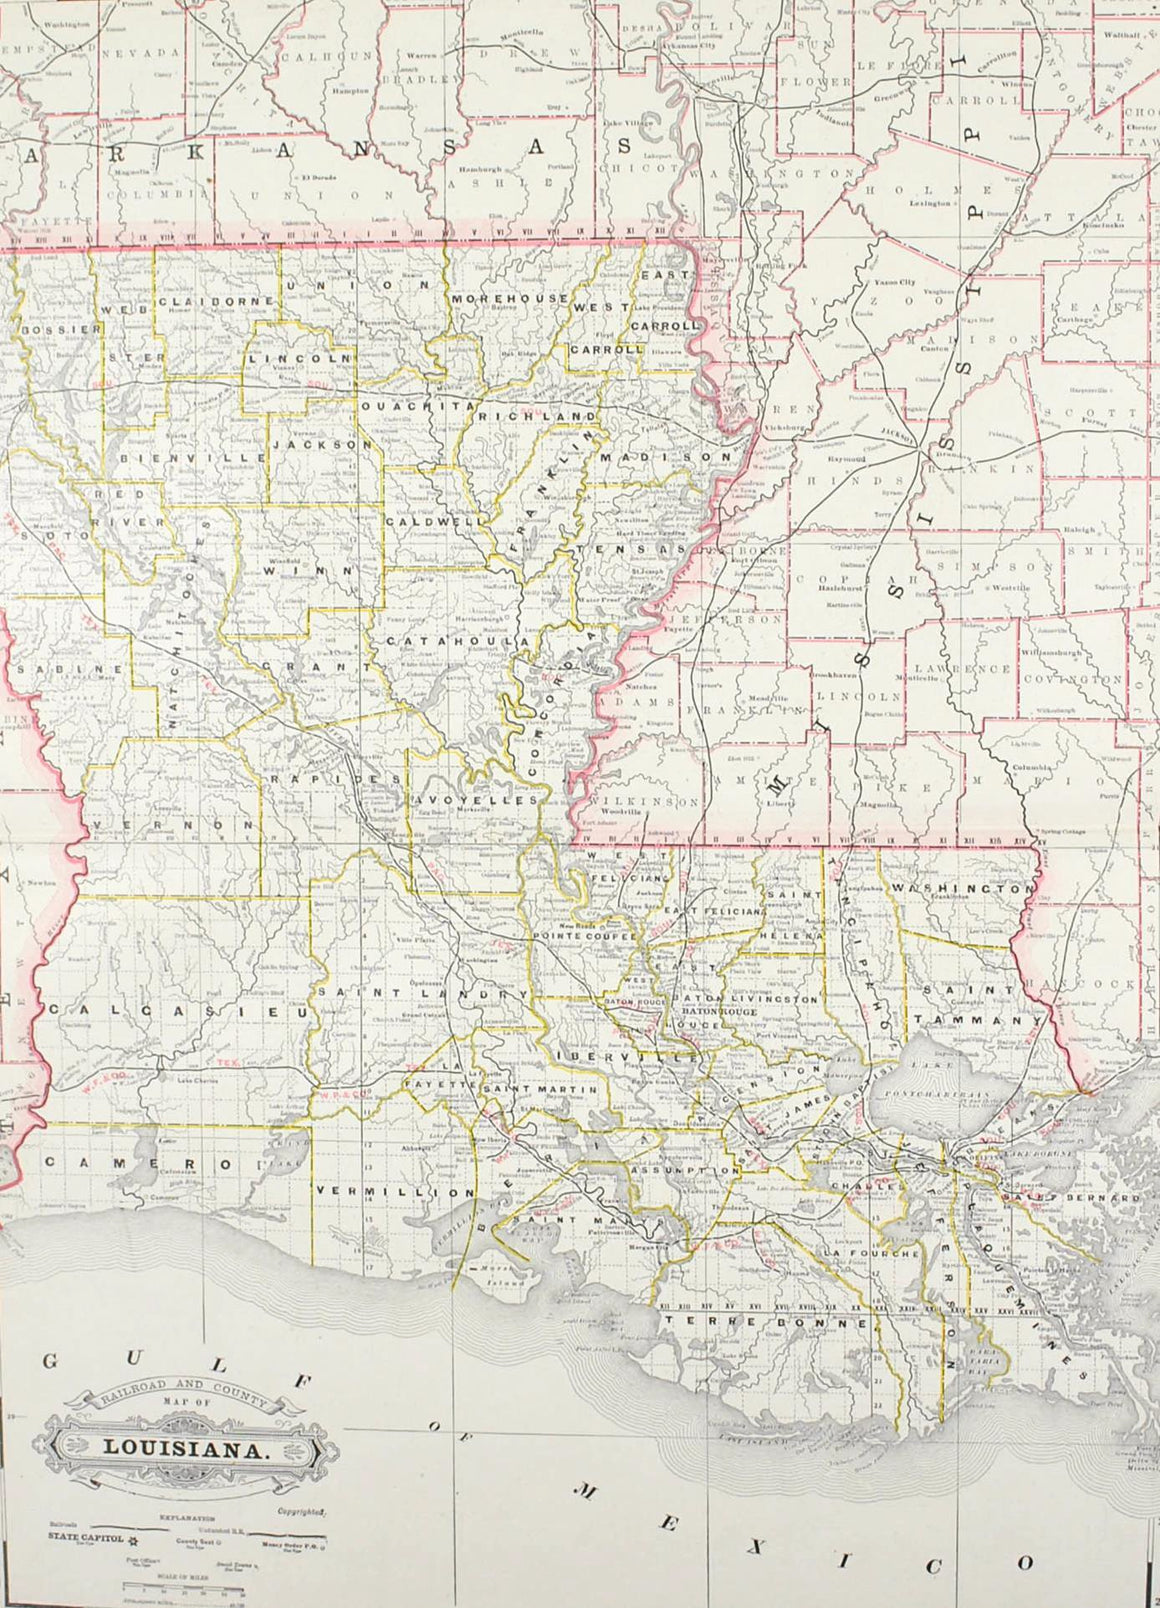 1887 Railroad and County Map of Louisiana